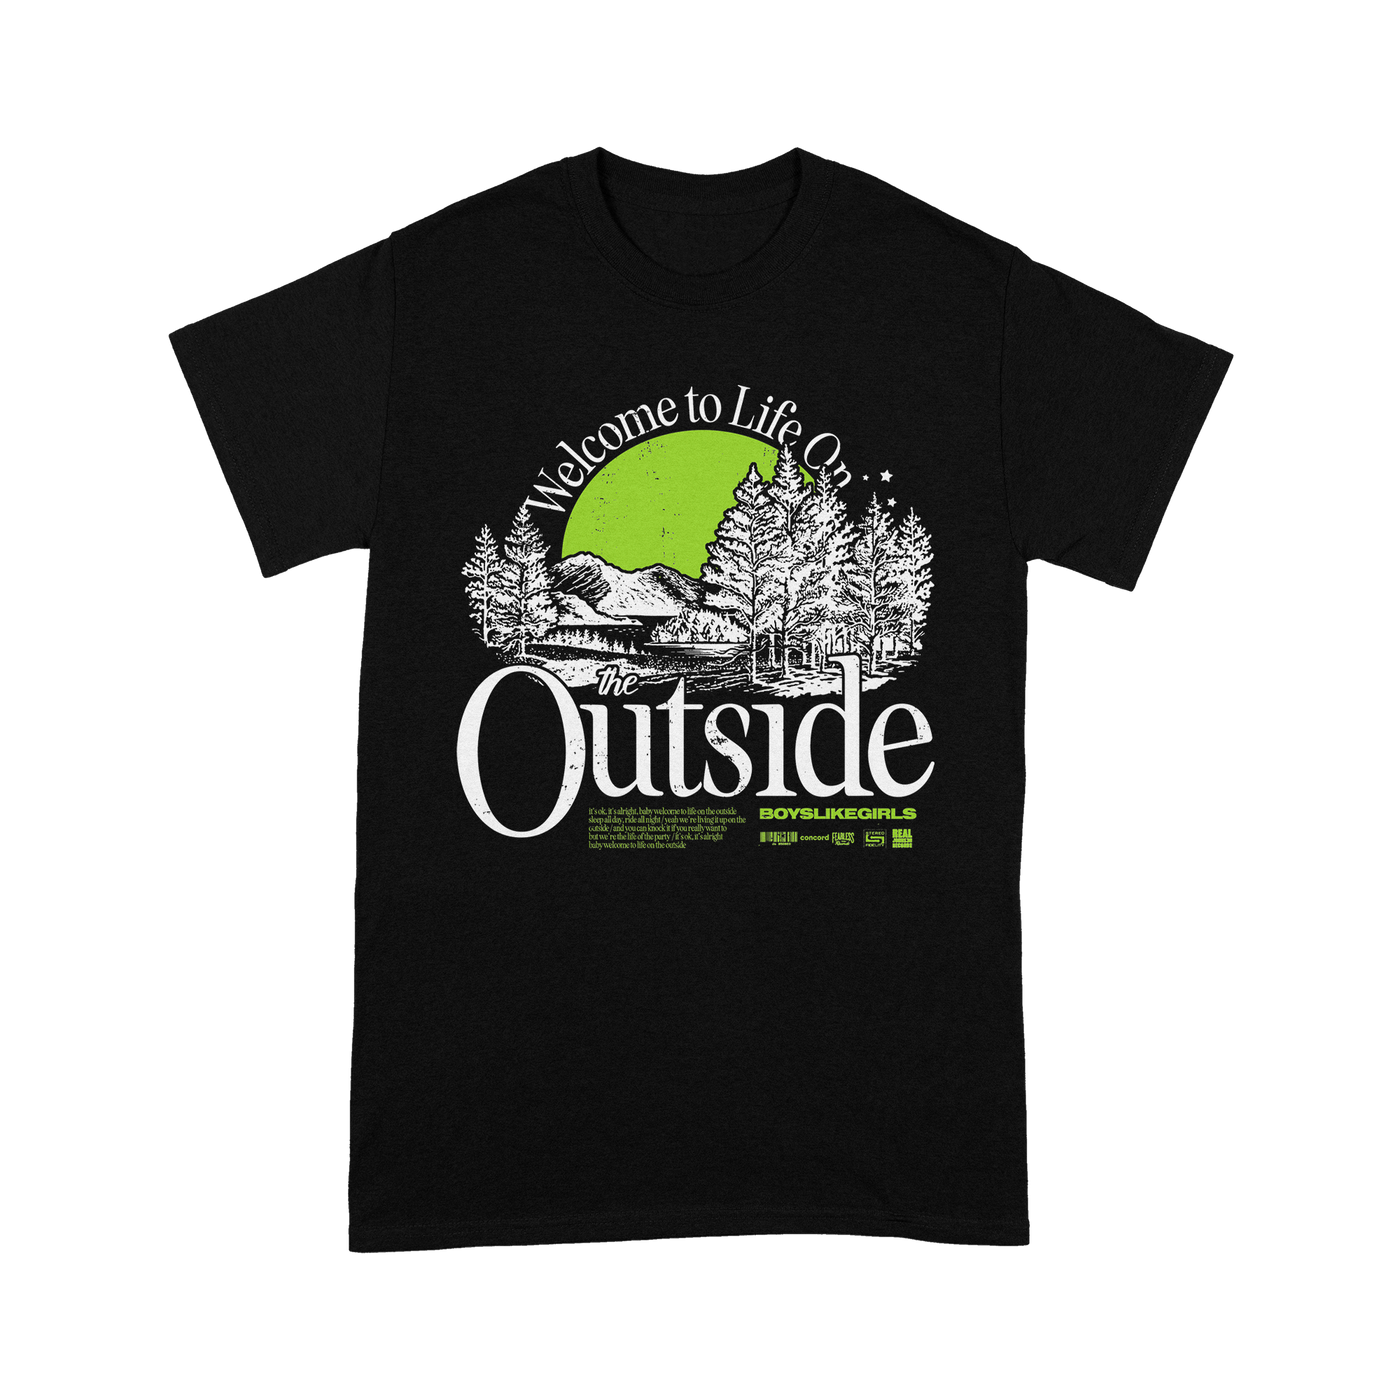 "THE OUTSIDE" Black T-Shirt